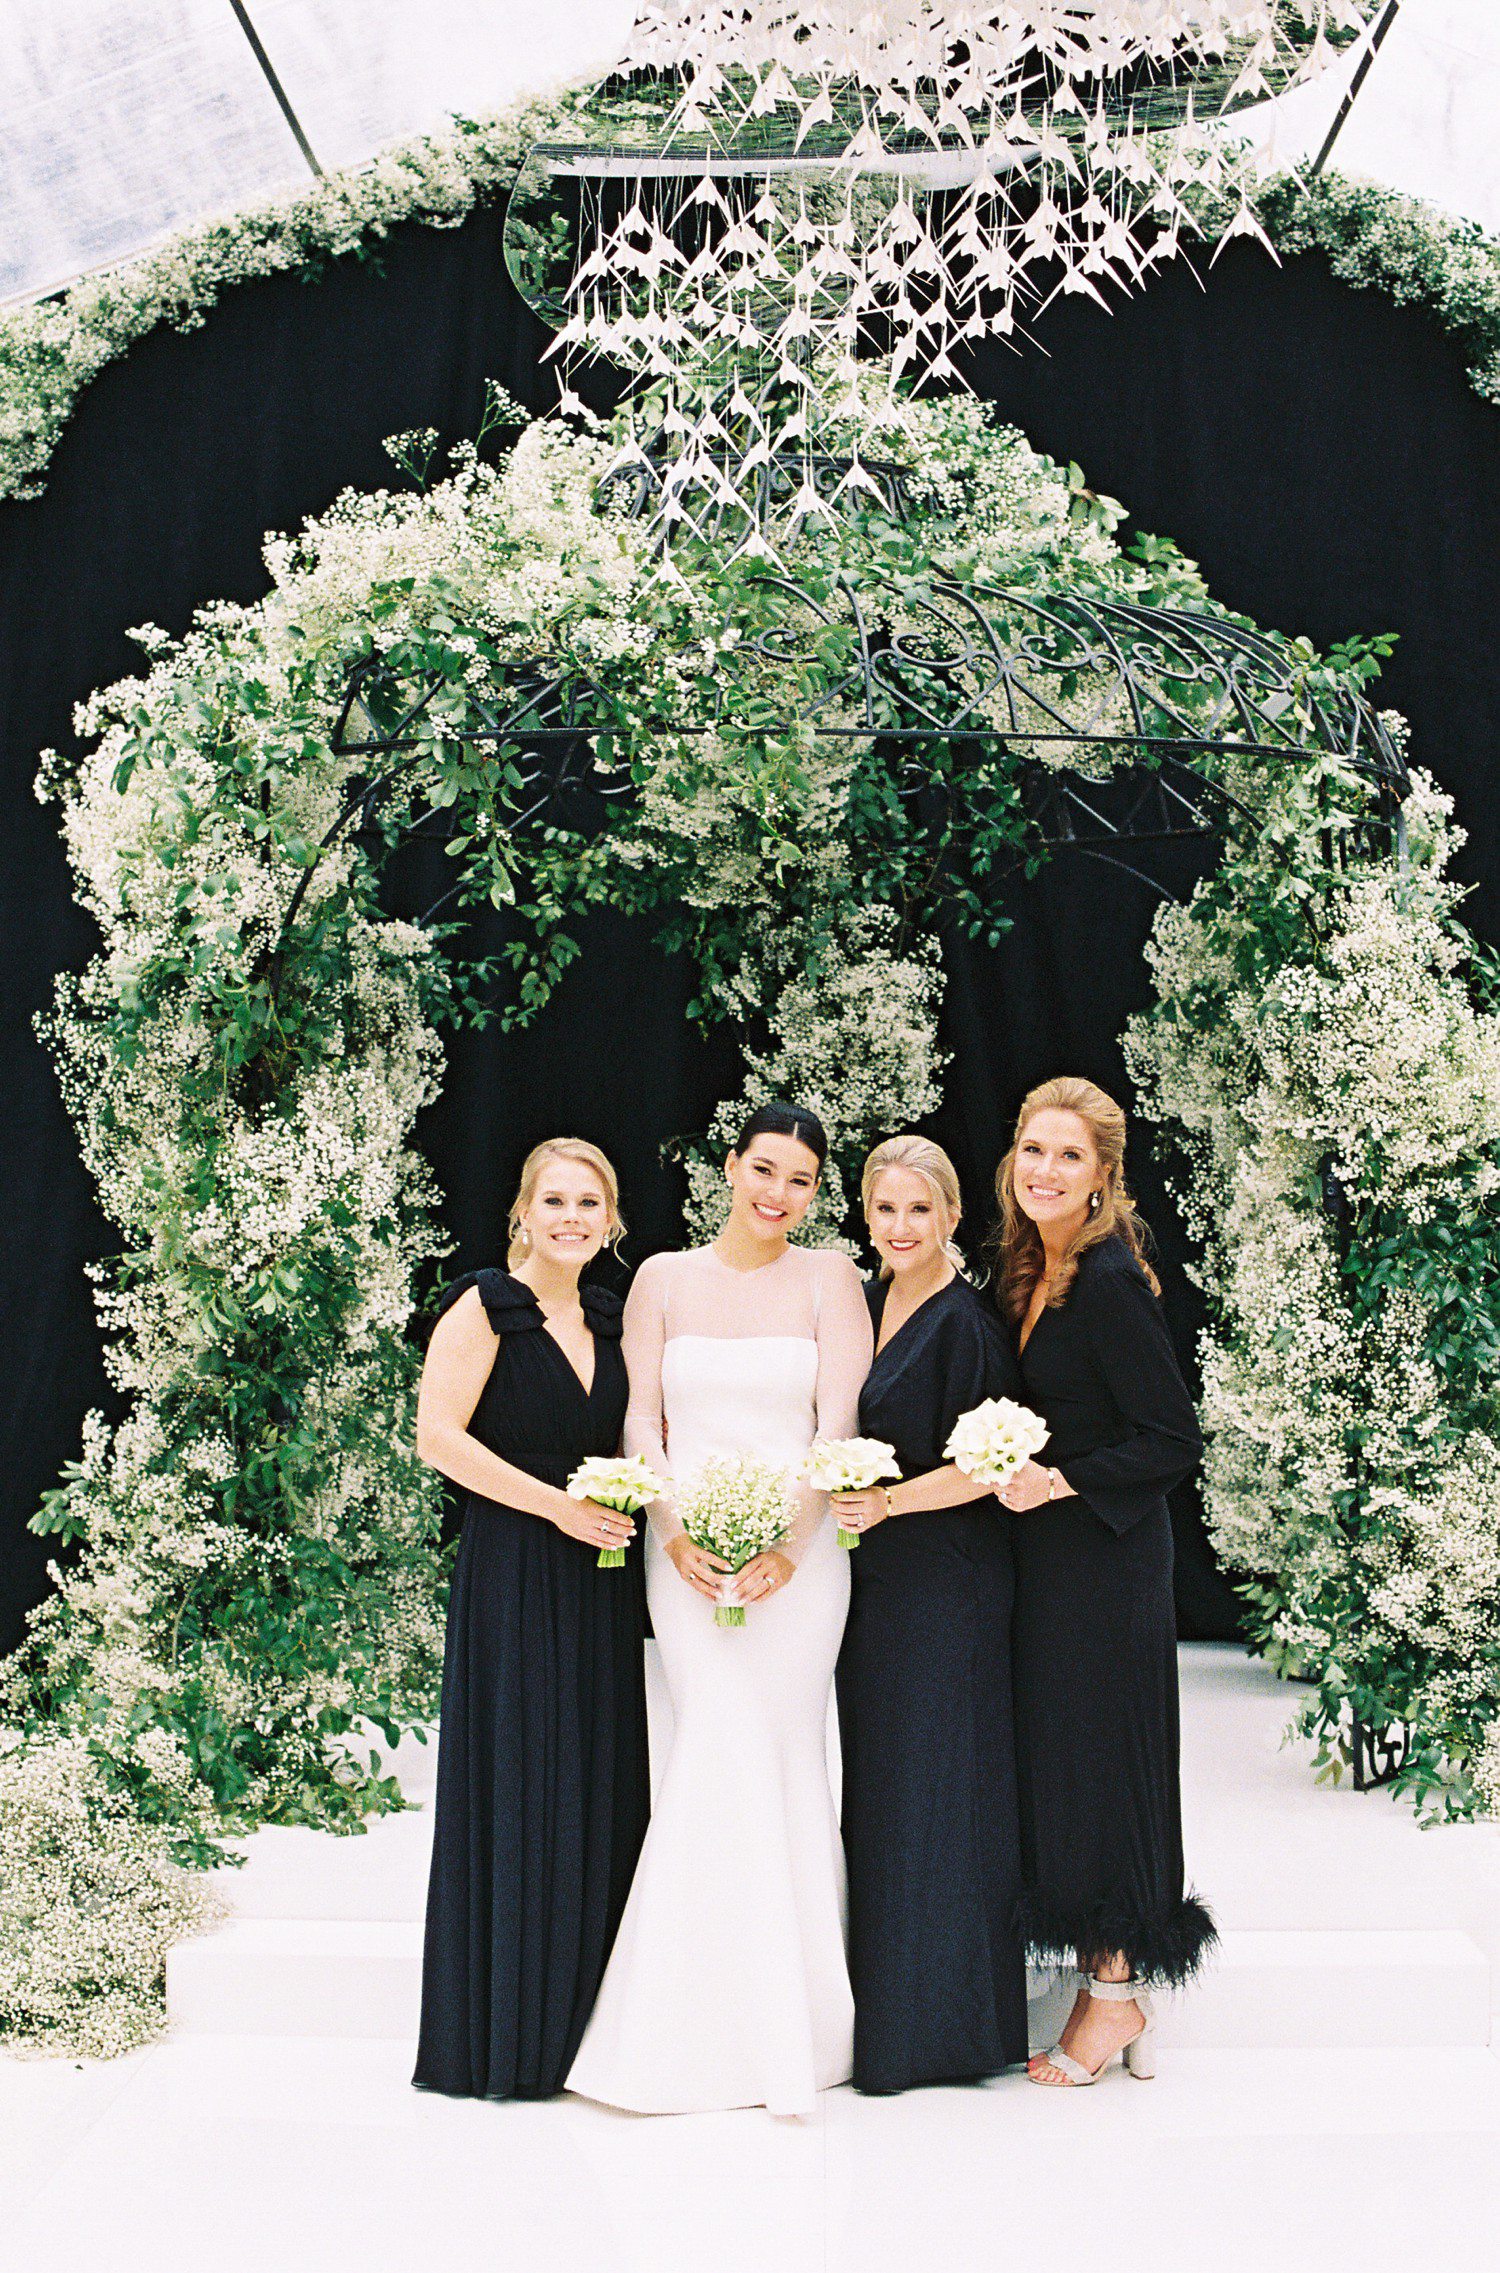 Bride with Bridesmaids in Black Dresses